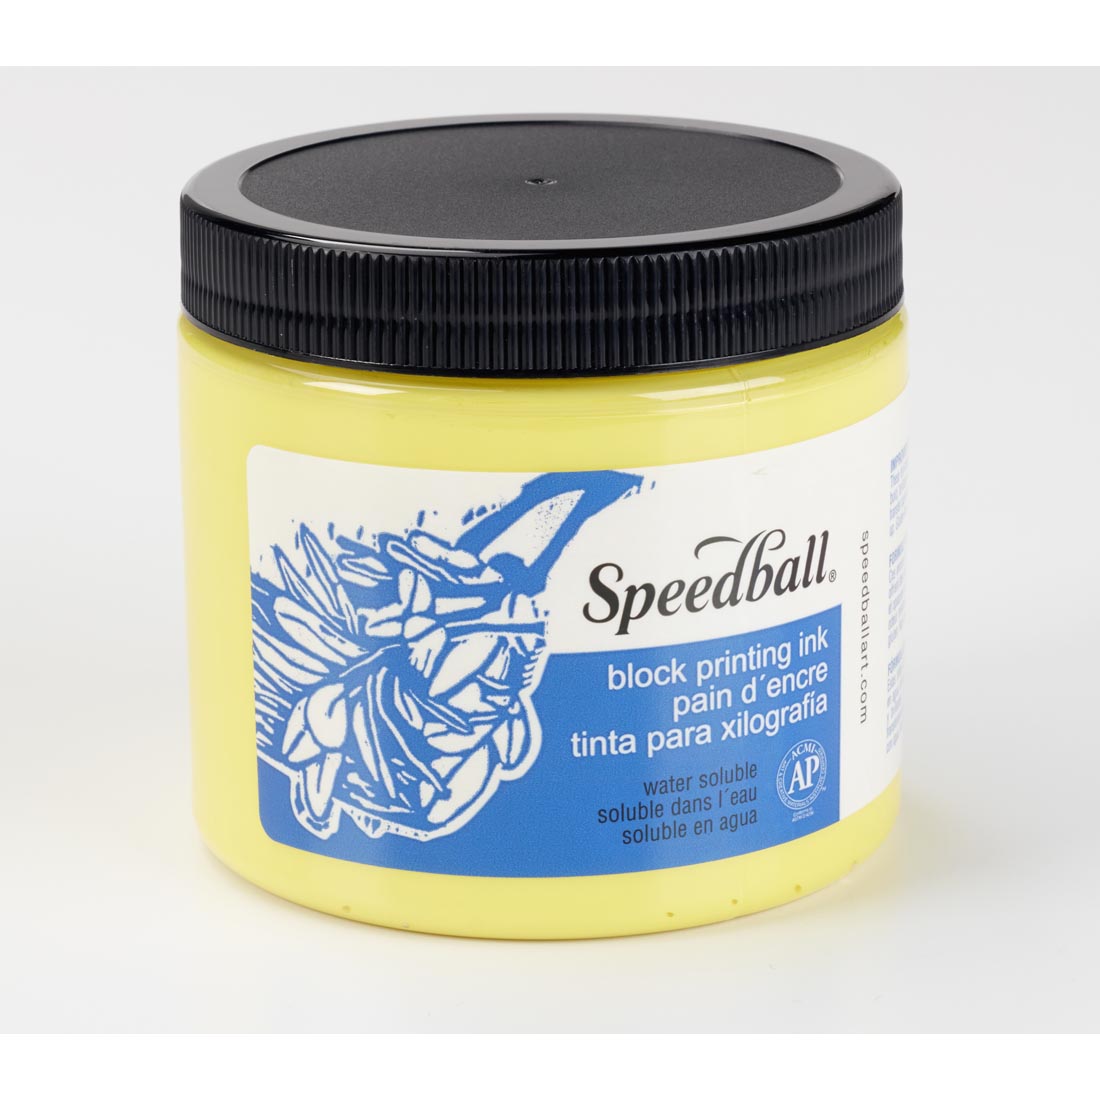 Jar of Yellow Speedball Water-Soluble Block Printing Ink